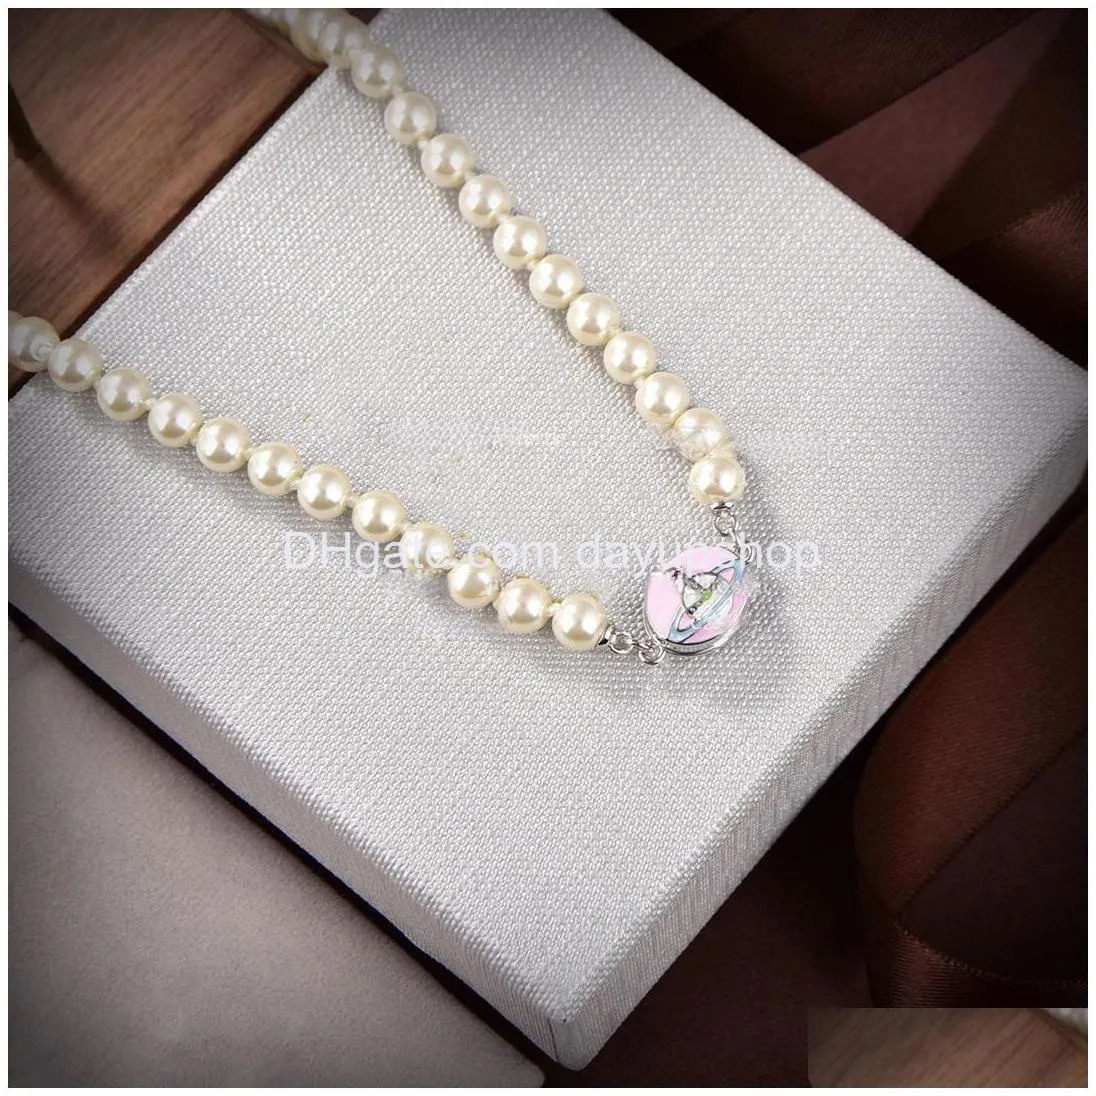 designer brand pendant necklaces letter vivian chokers luxury women fashion jewelry metal pearl necklace cjeweler westwood fdf dgfddf